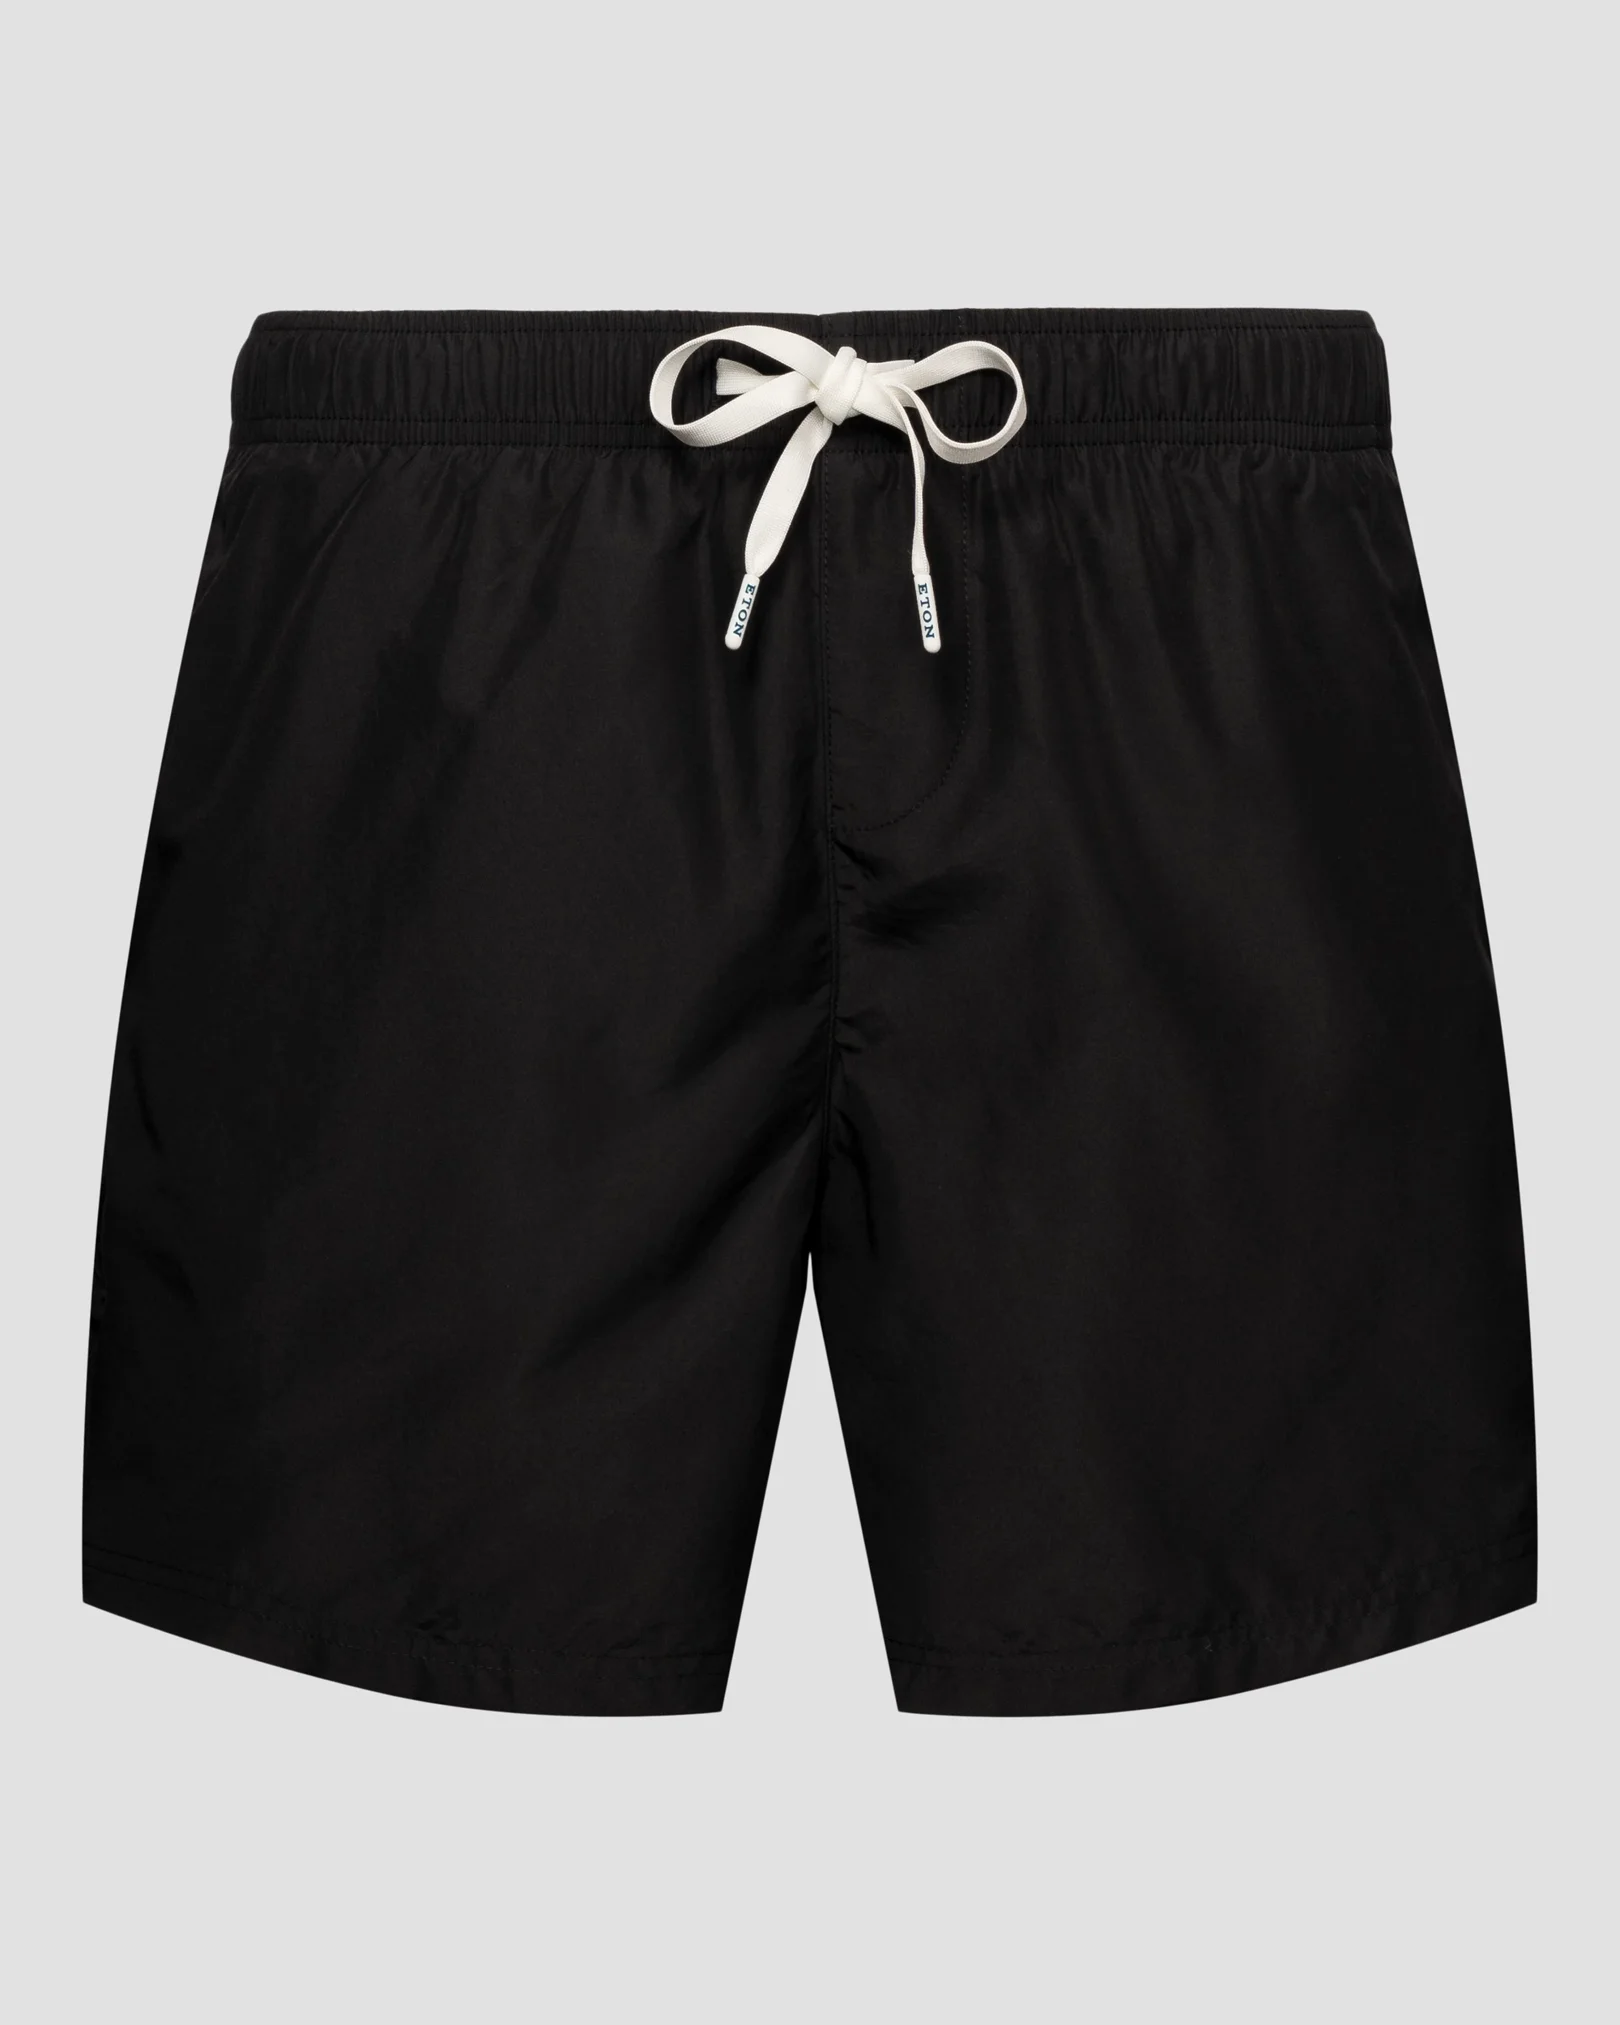 Black Swimming Shorts